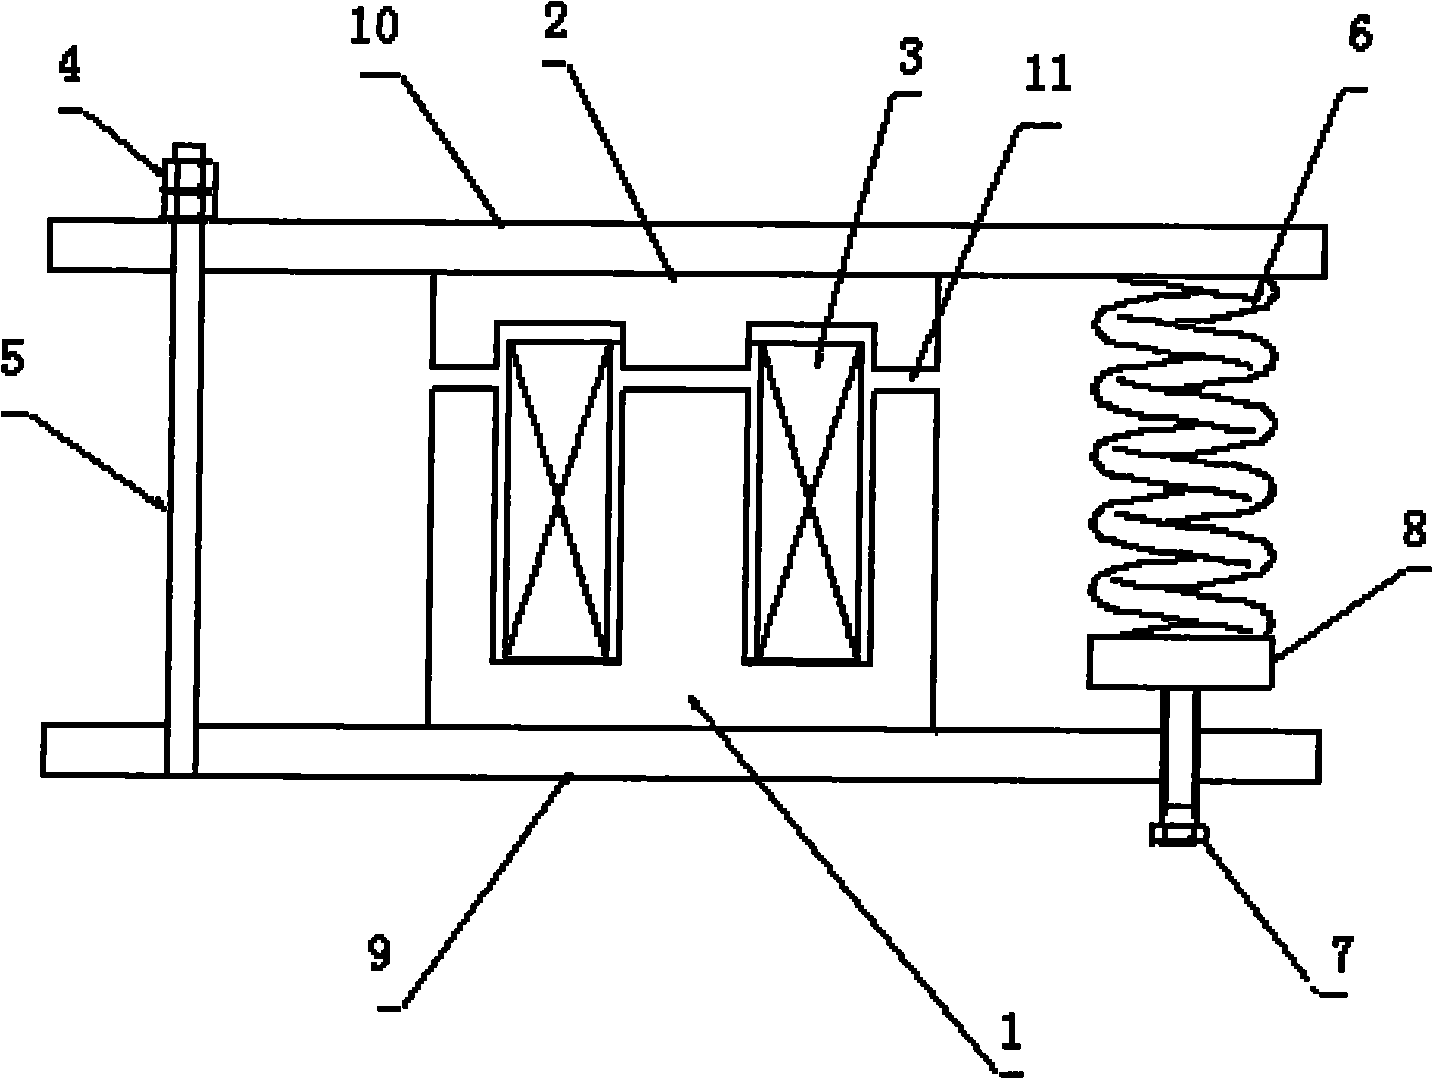 Vibration machine with electromagnetic vibration source